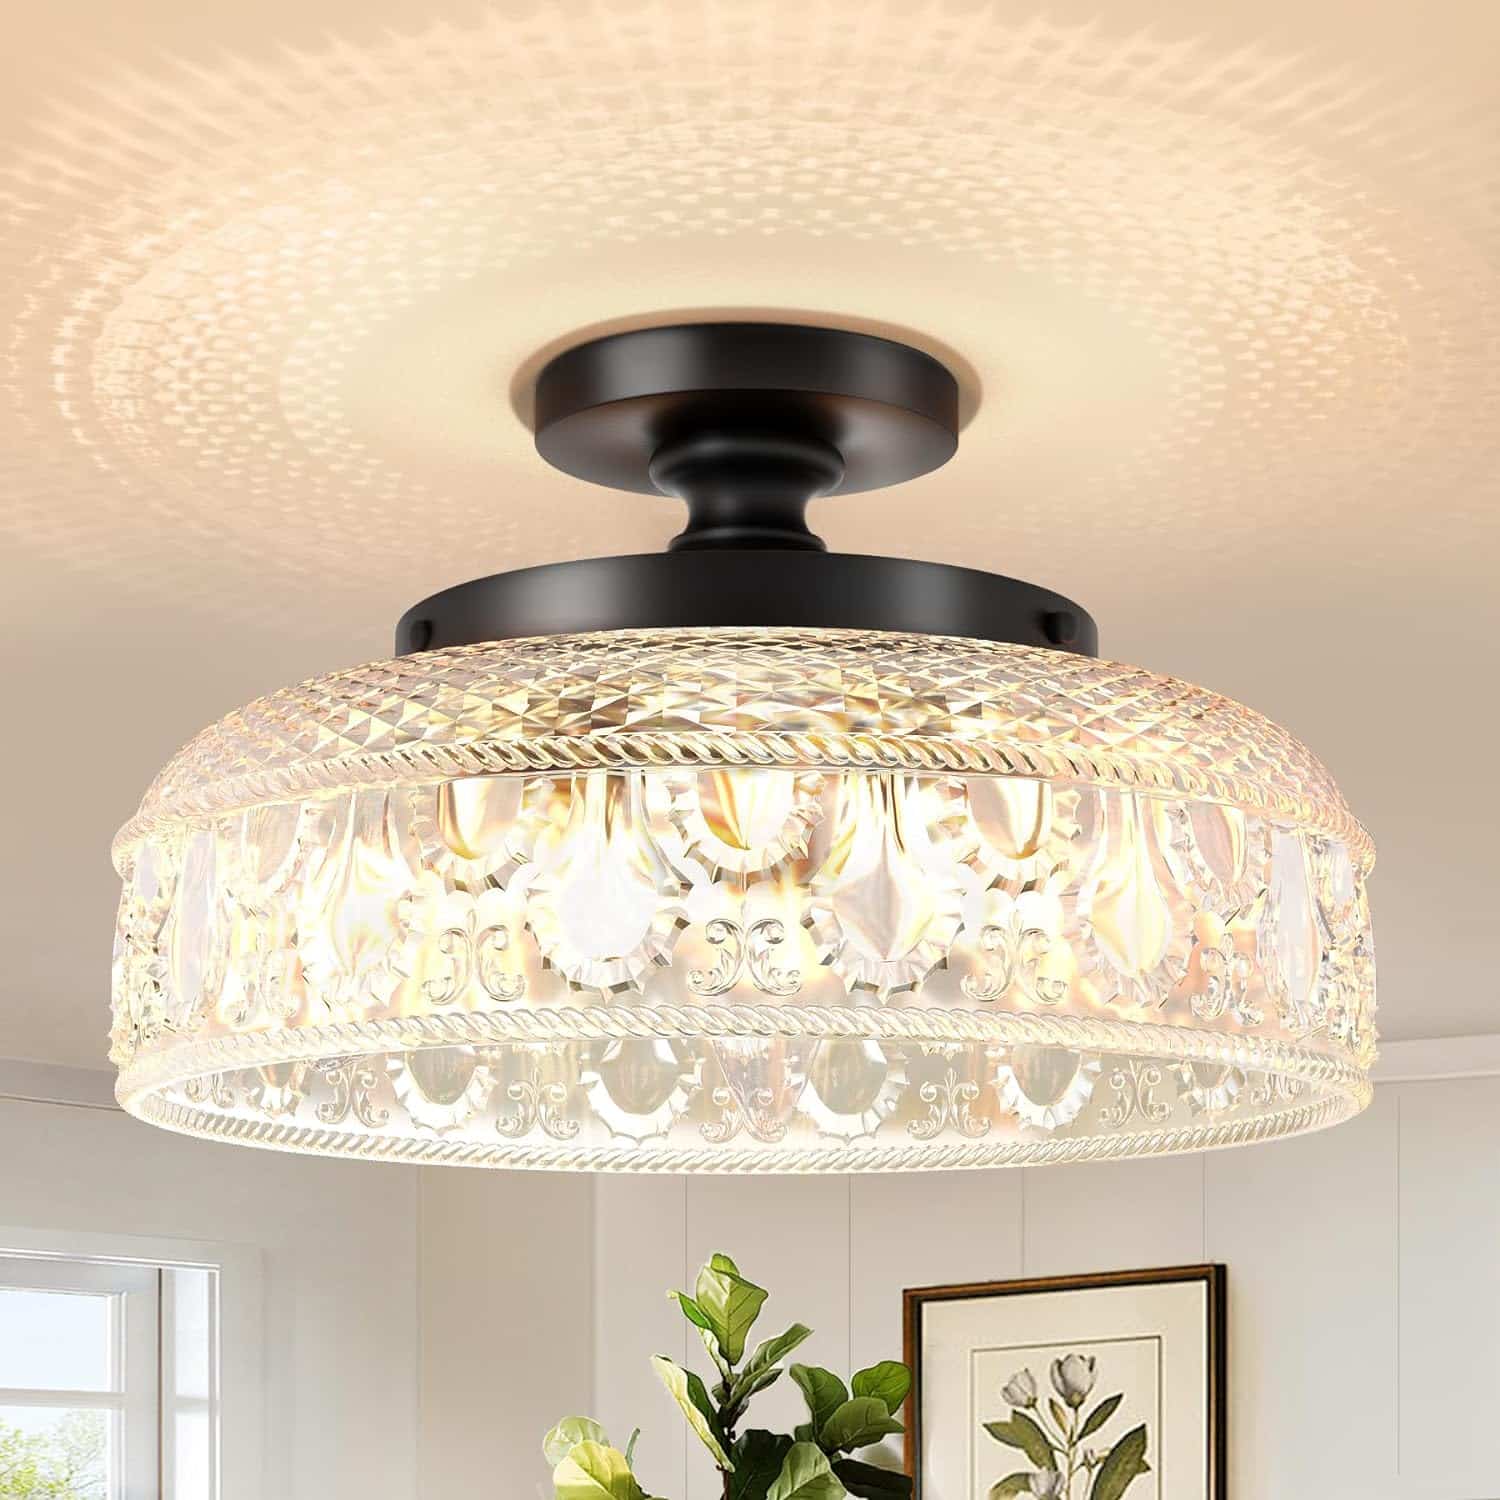 Lamomo Semi Flush Mount Ceiling Light: Illuminate Your Space with Style